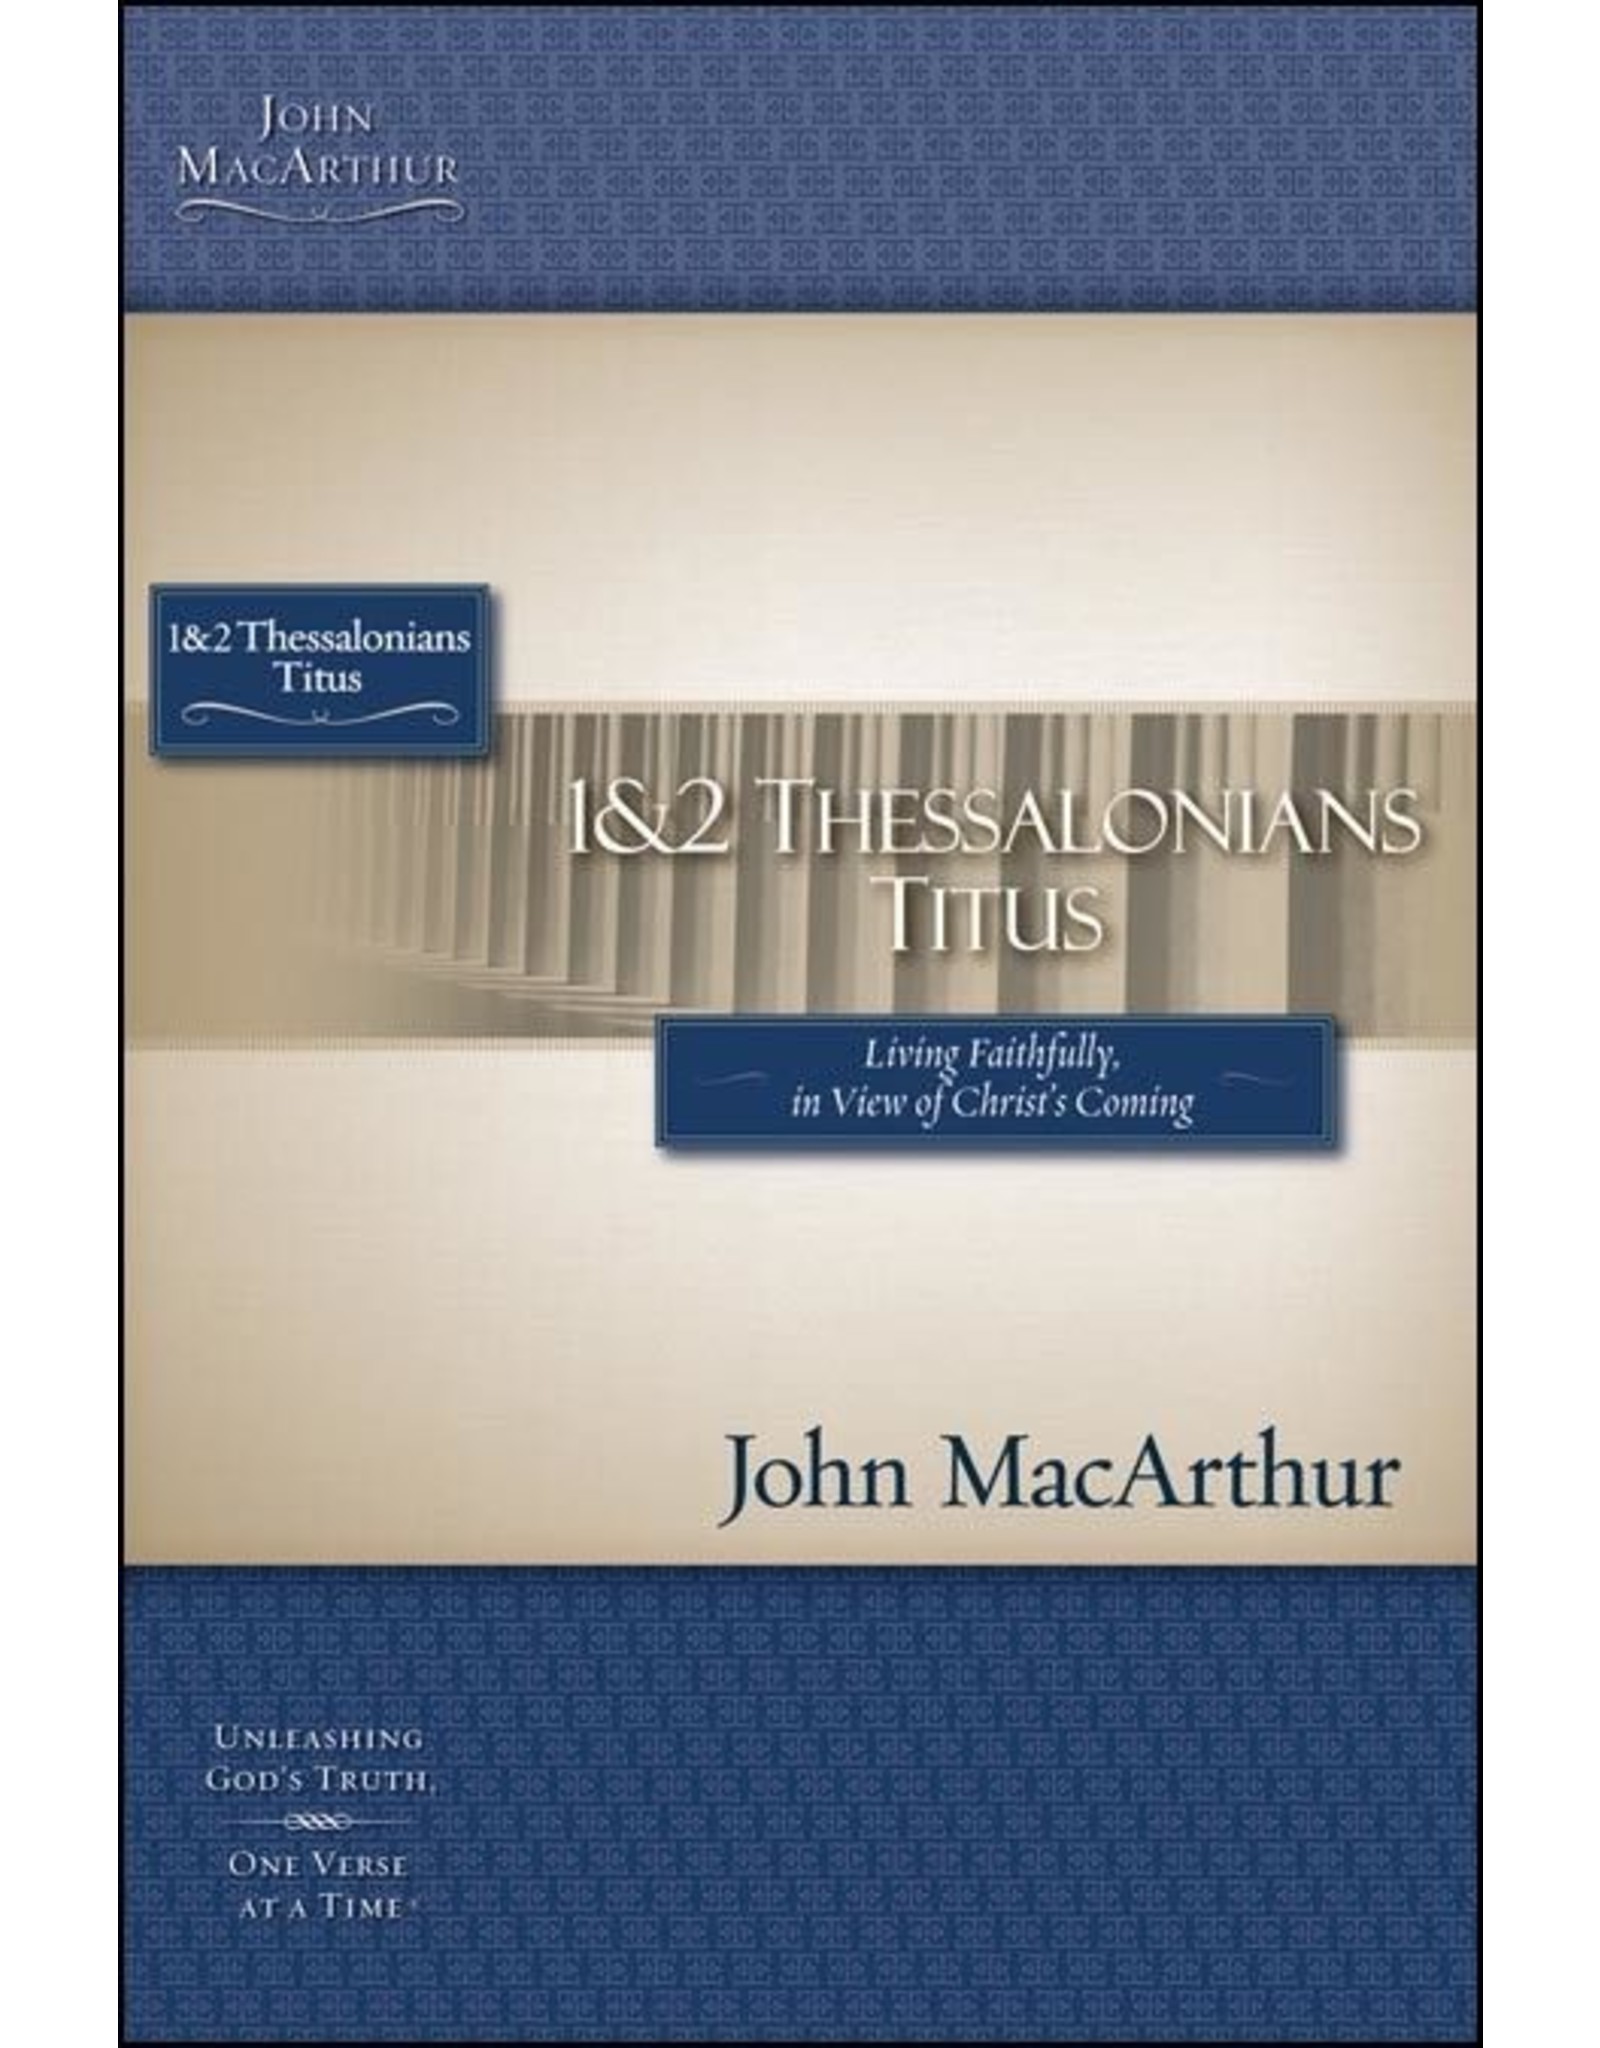 Harper Collins / Thomas Nelson / Zondervan (1st Ed.) MacArthur Bible Study: 1 & 2 Thessalonians and Titus